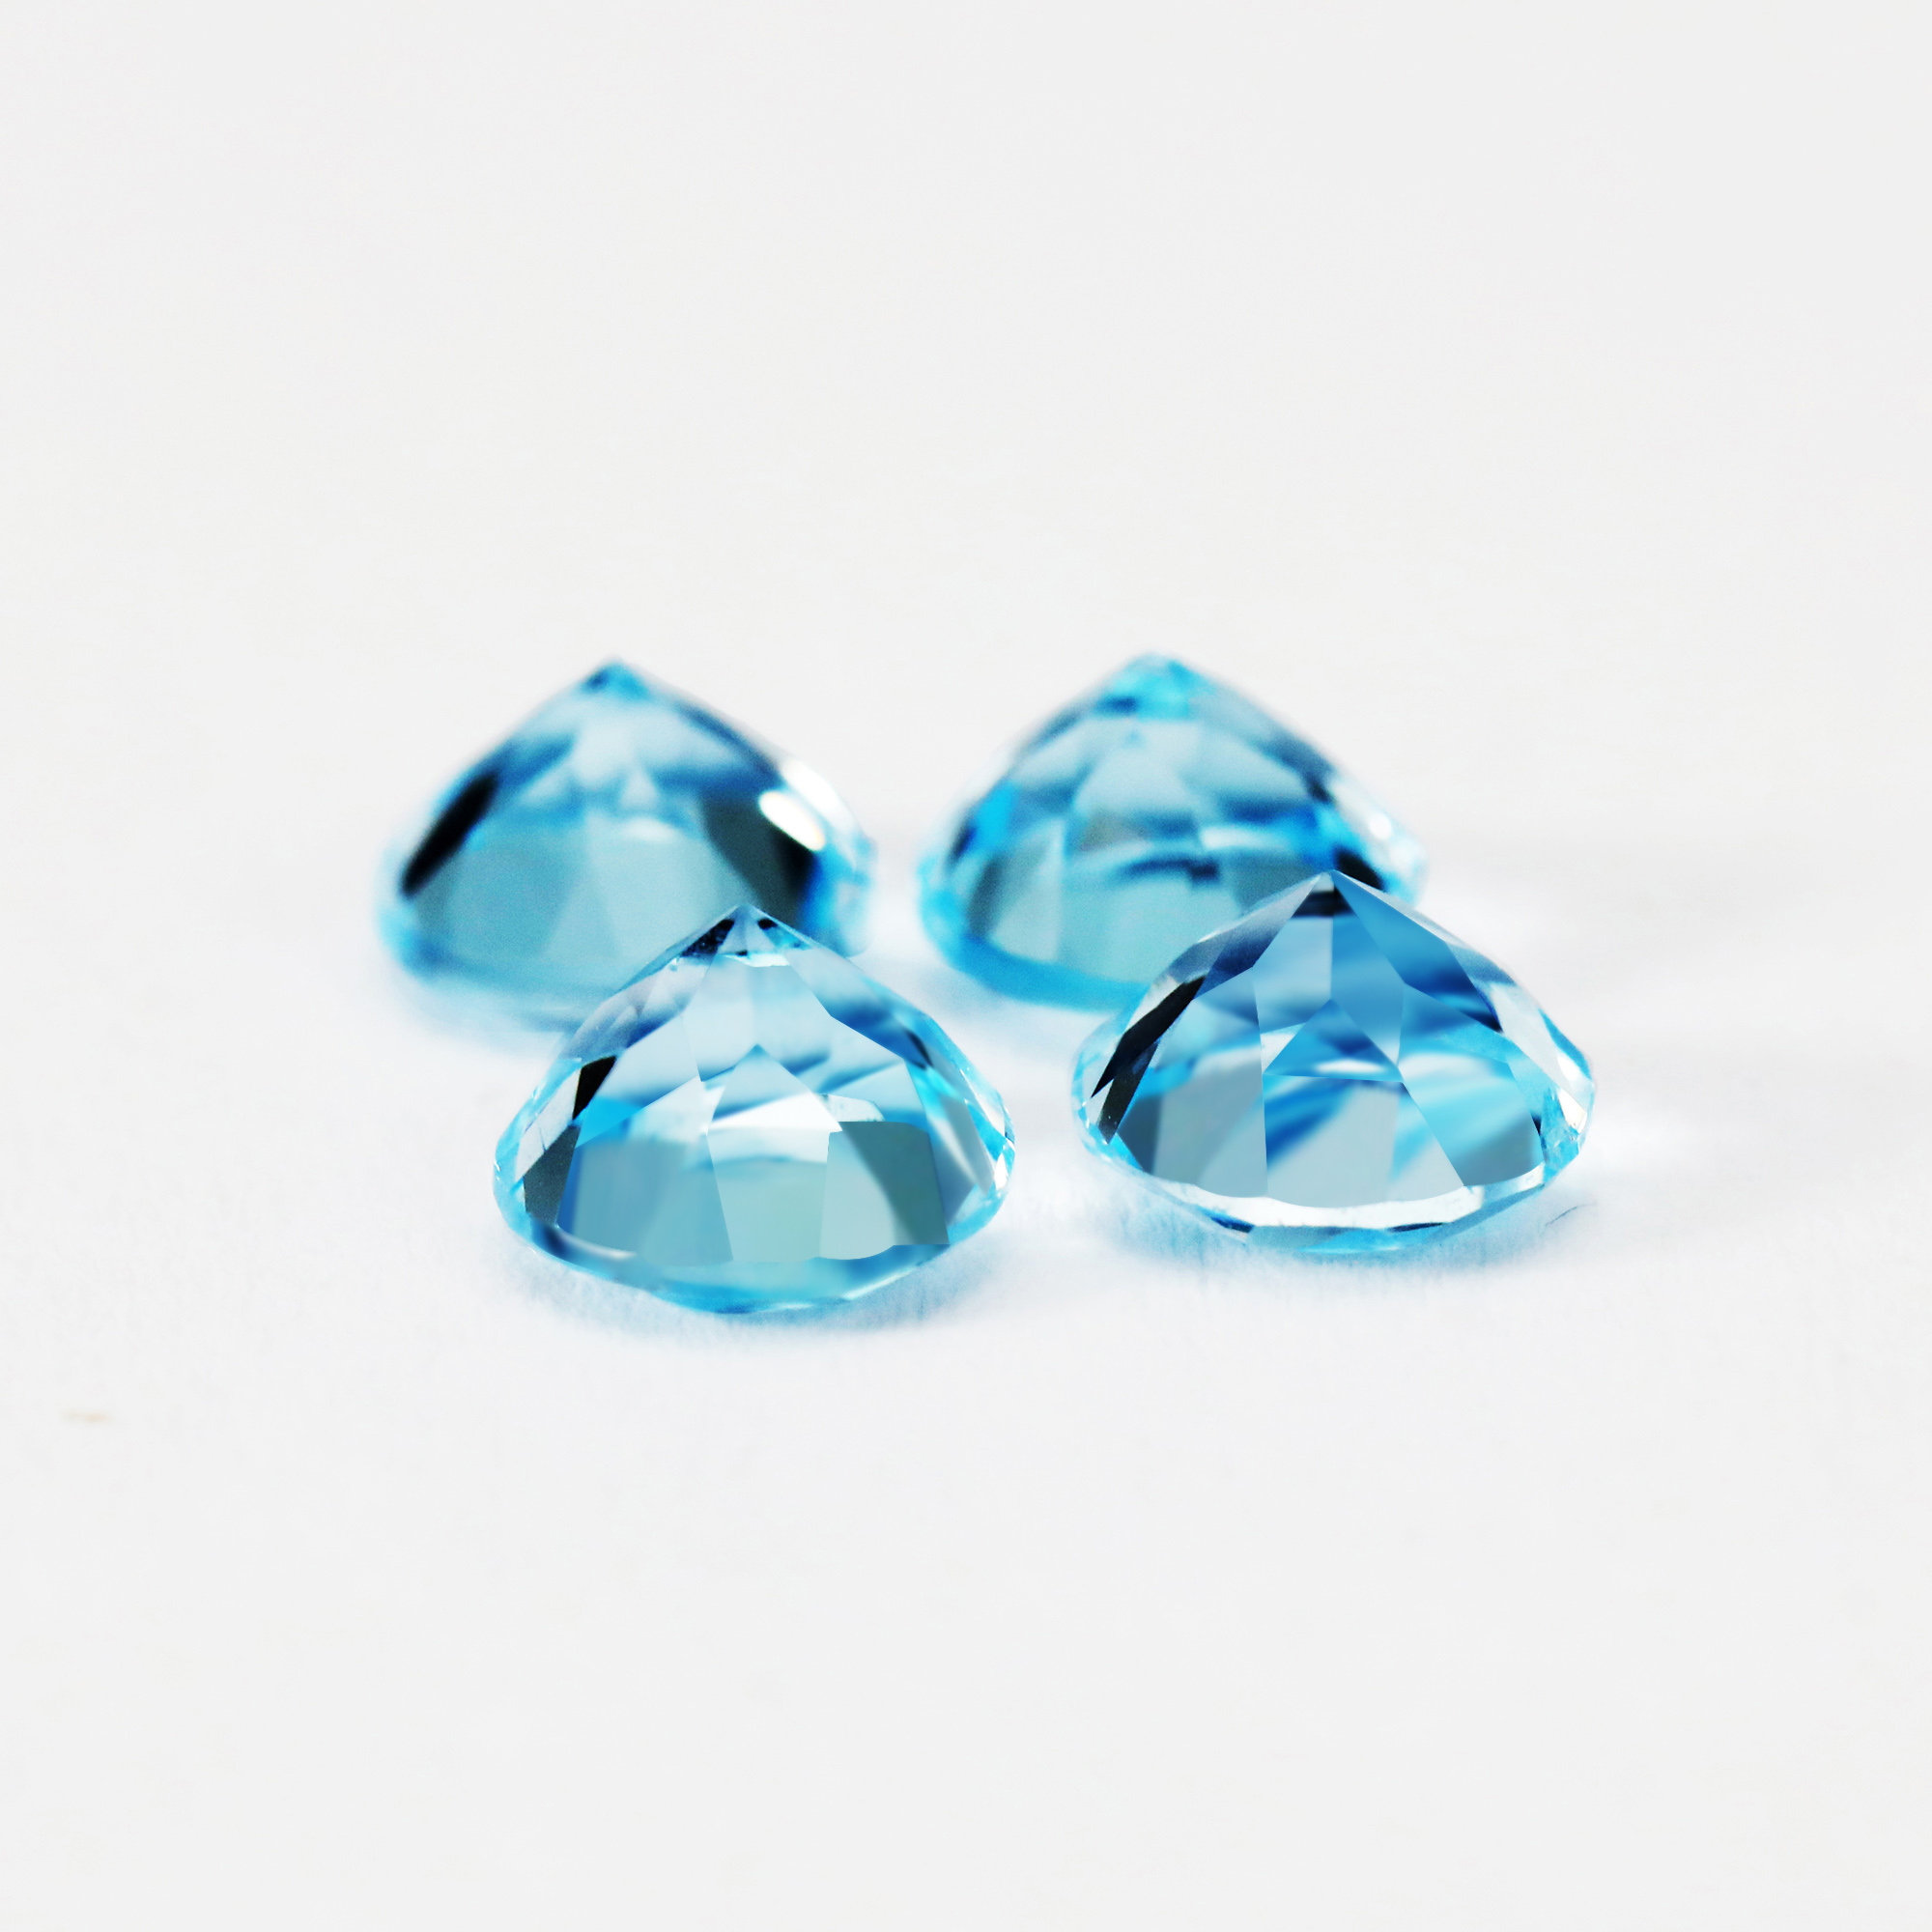 2-9MM Natural Round Faceted Sky Blue Topaz Gemstone November Birthstone DIY Loose Semi Precious Gemstone DIY Jewelry Supplies 4110178 - Click Image to Close